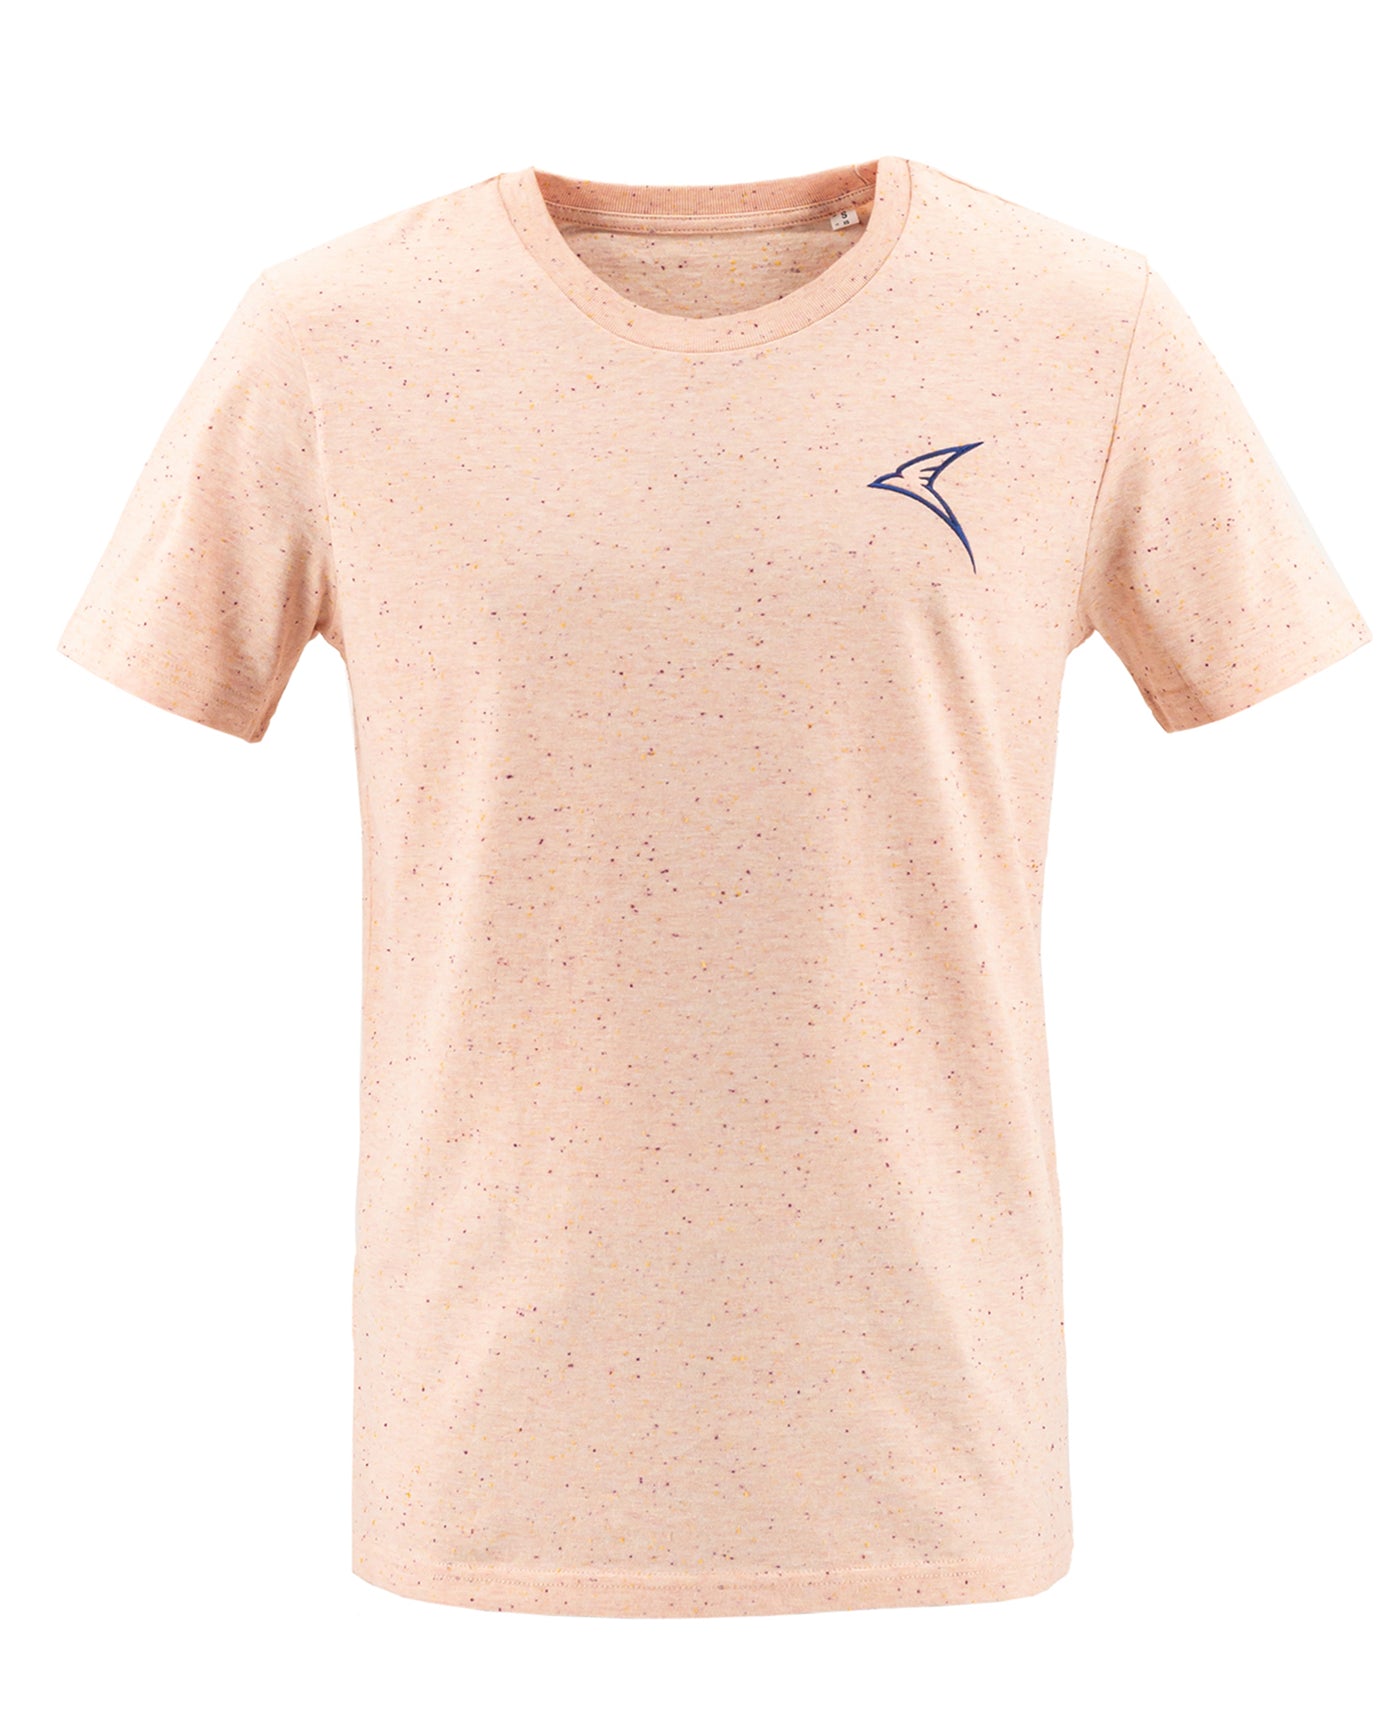 Herren Neutron T-Shirt Pink